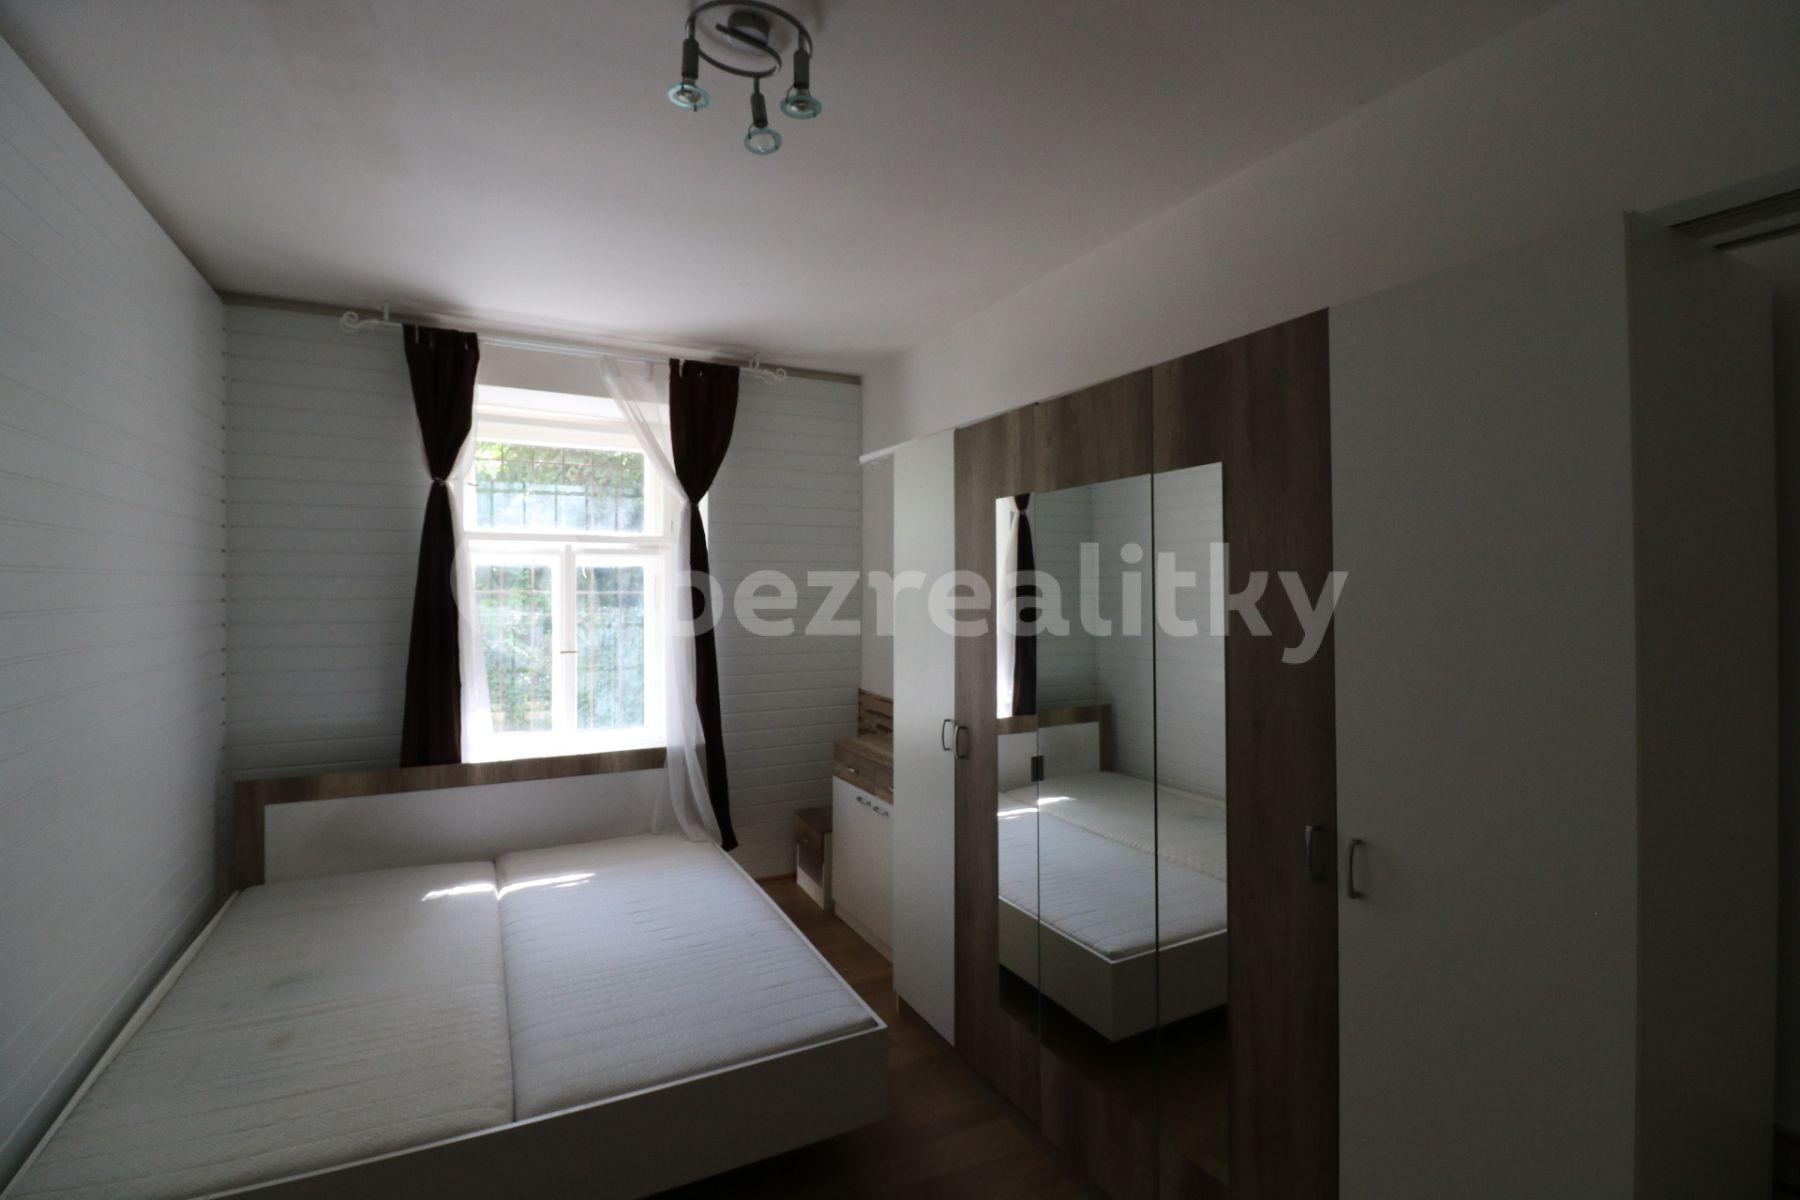 1 bedroom with open-plan kitchen flat for sale, 40 m², Žitomírská, Prague, Prague